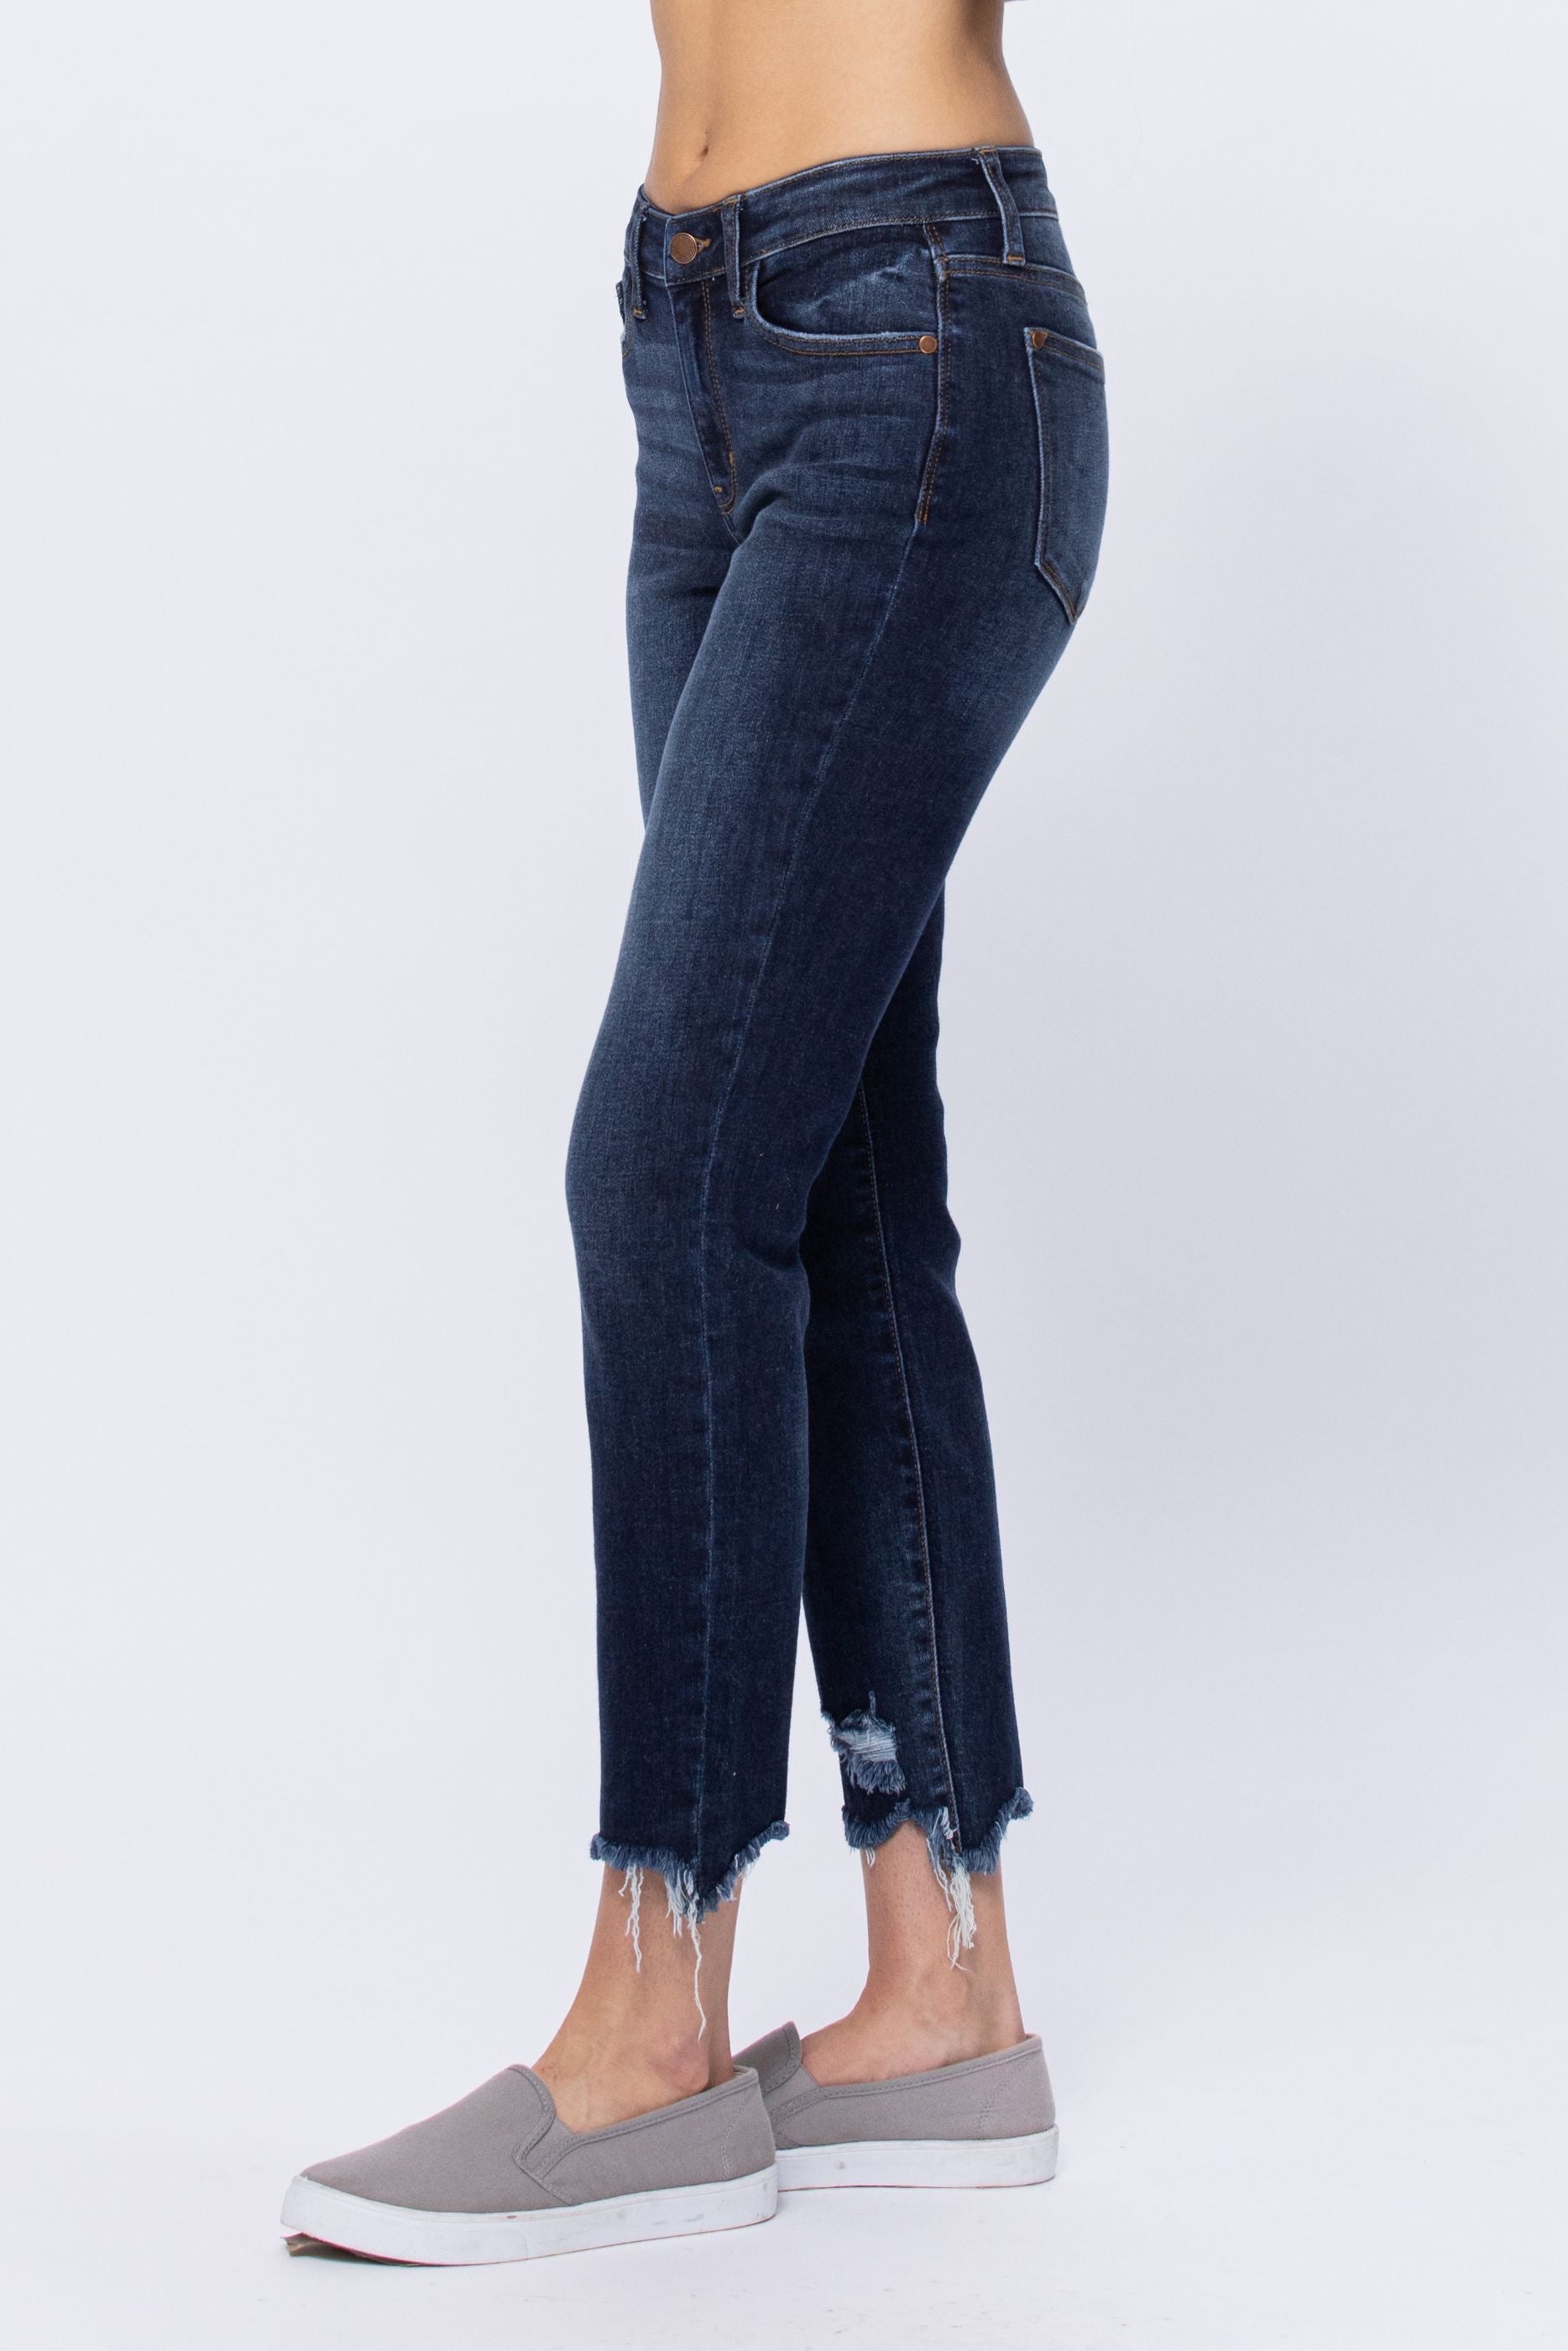 Judy Blue Abilene Mid Rise Long/Tall Skinny Jeans - Boujee Boutique